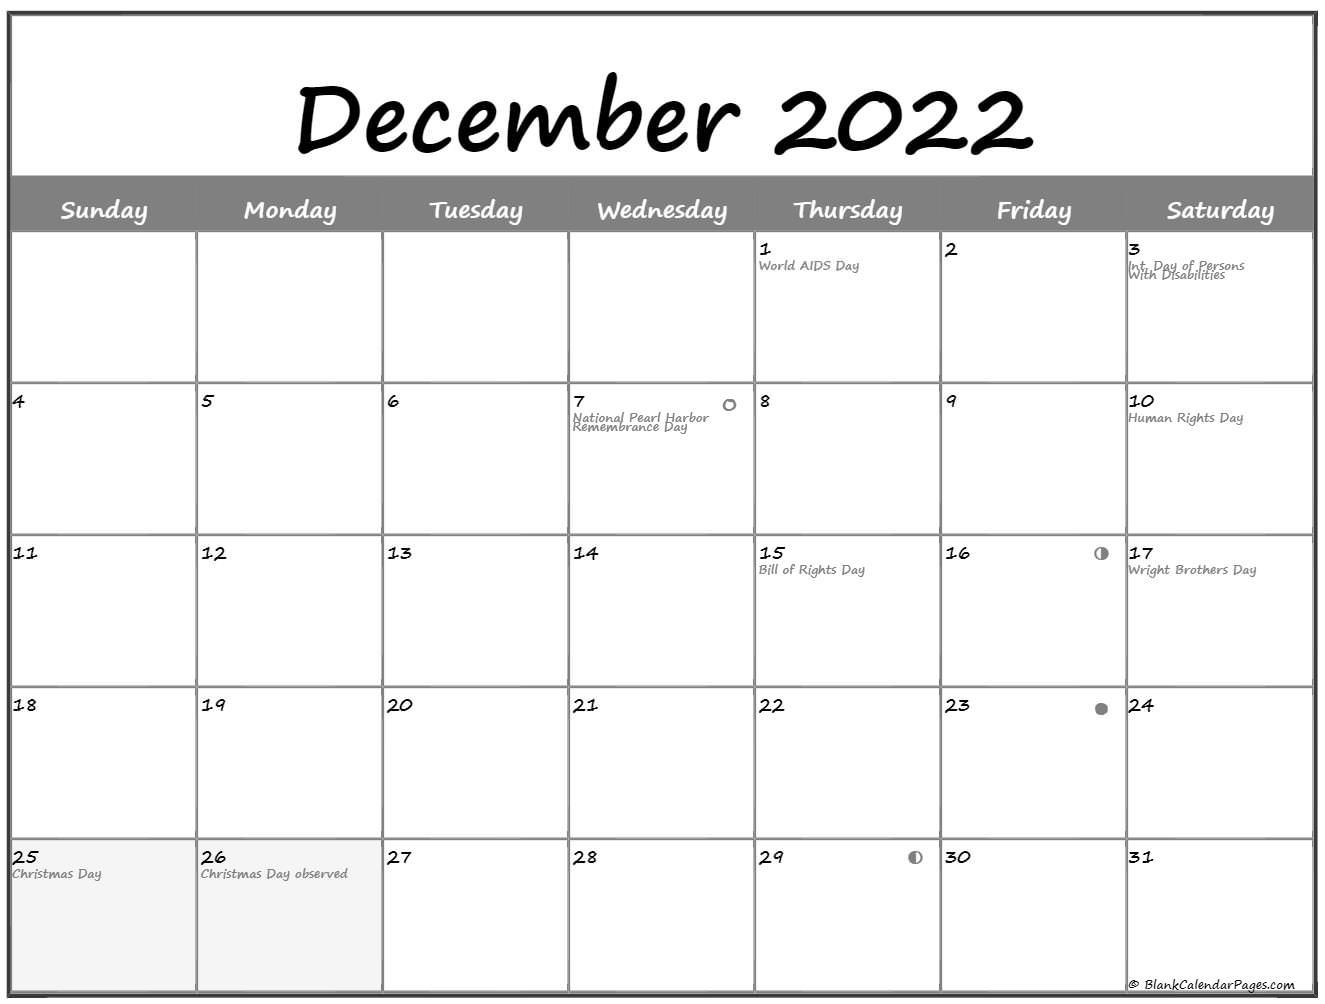 December 2022 Lunar Calendar | Moon Phase Calendar